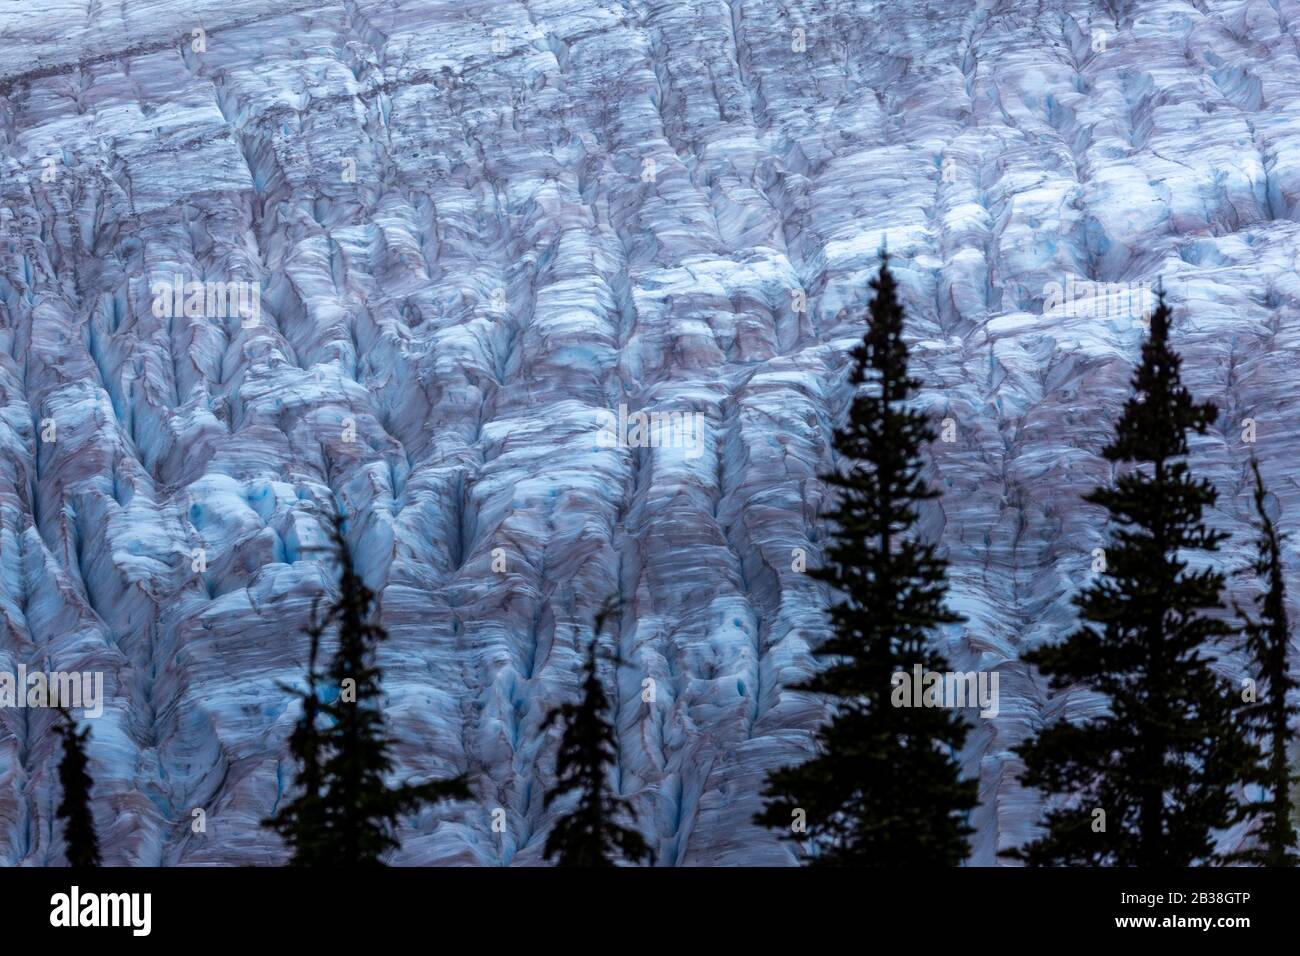 Salmon Glacier, Stewart, British Columbia, Canada. Moody scene close up details, background textures Stock Photo